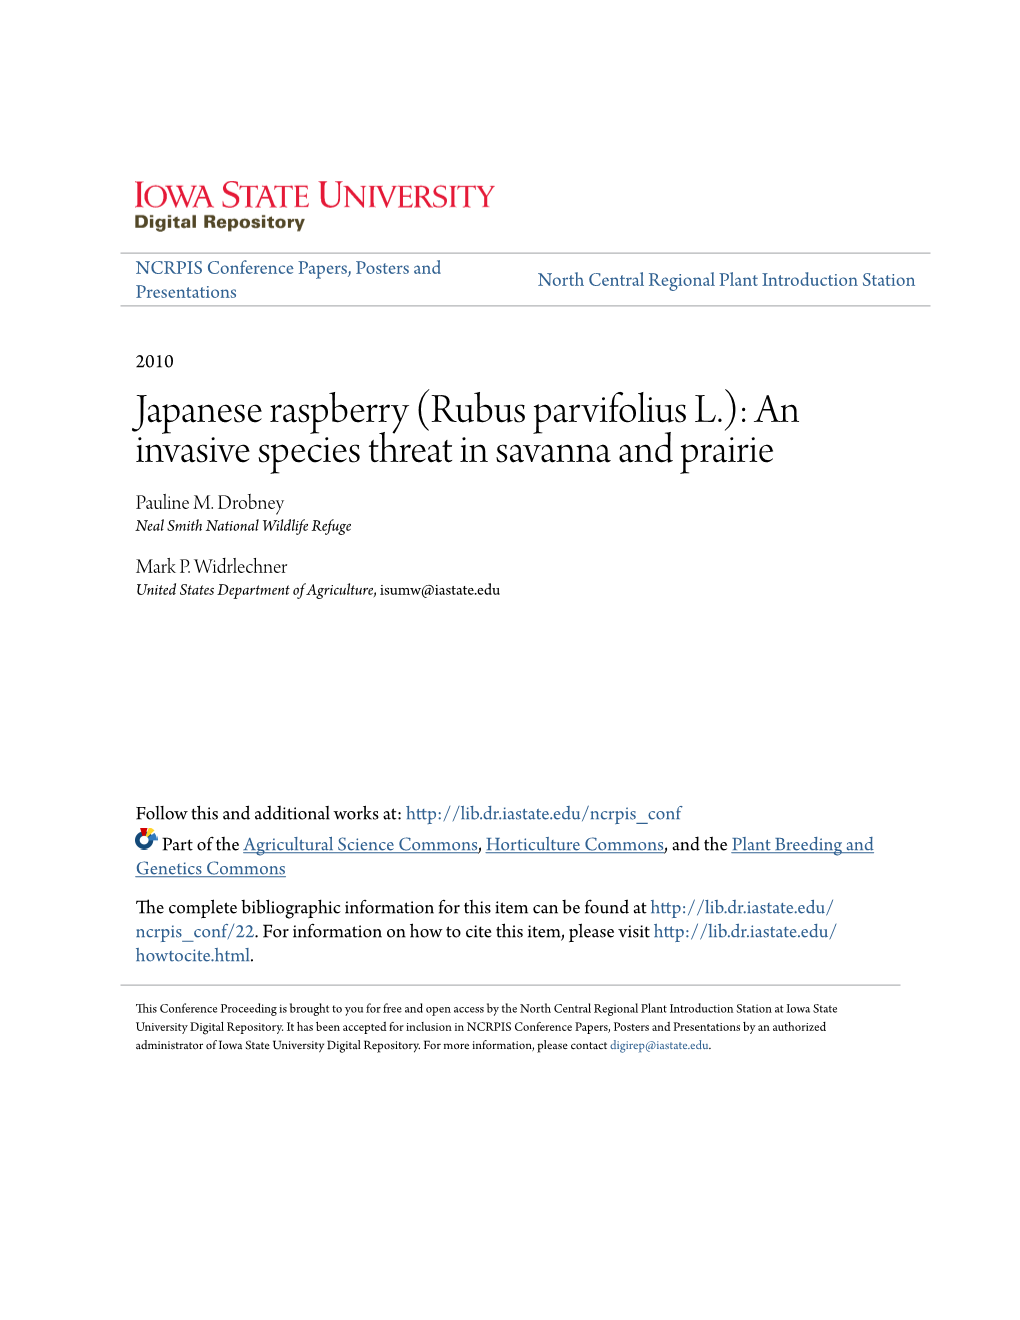 Japanese Raspberry (Rubus Parvifolius L.): an Invasive Species Threat in Savanna and Prairie Pauline M